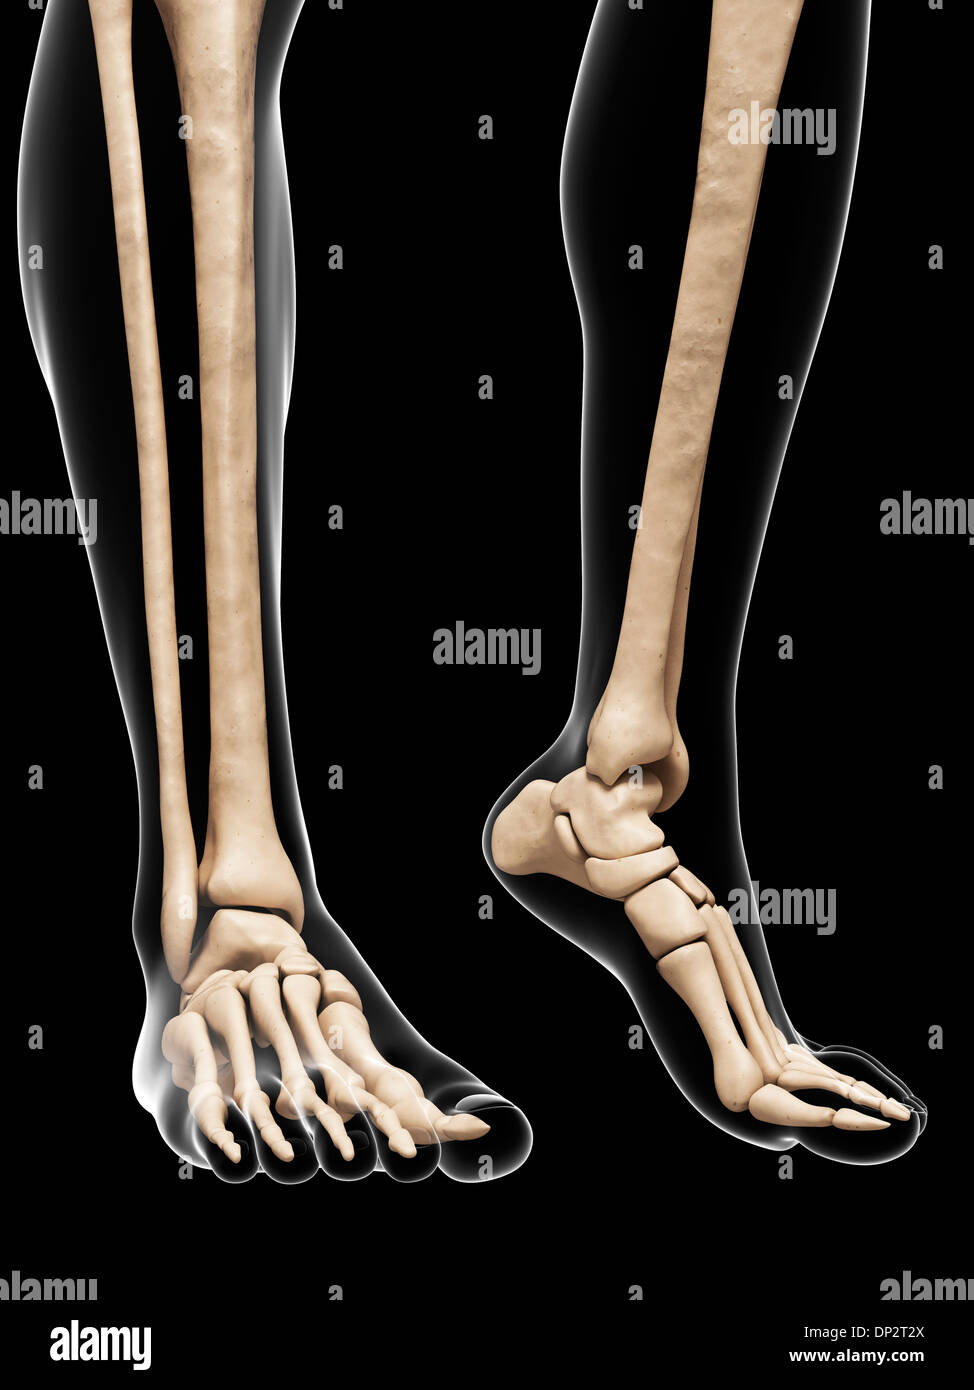 Bones of the feet, artwork Stock Photo